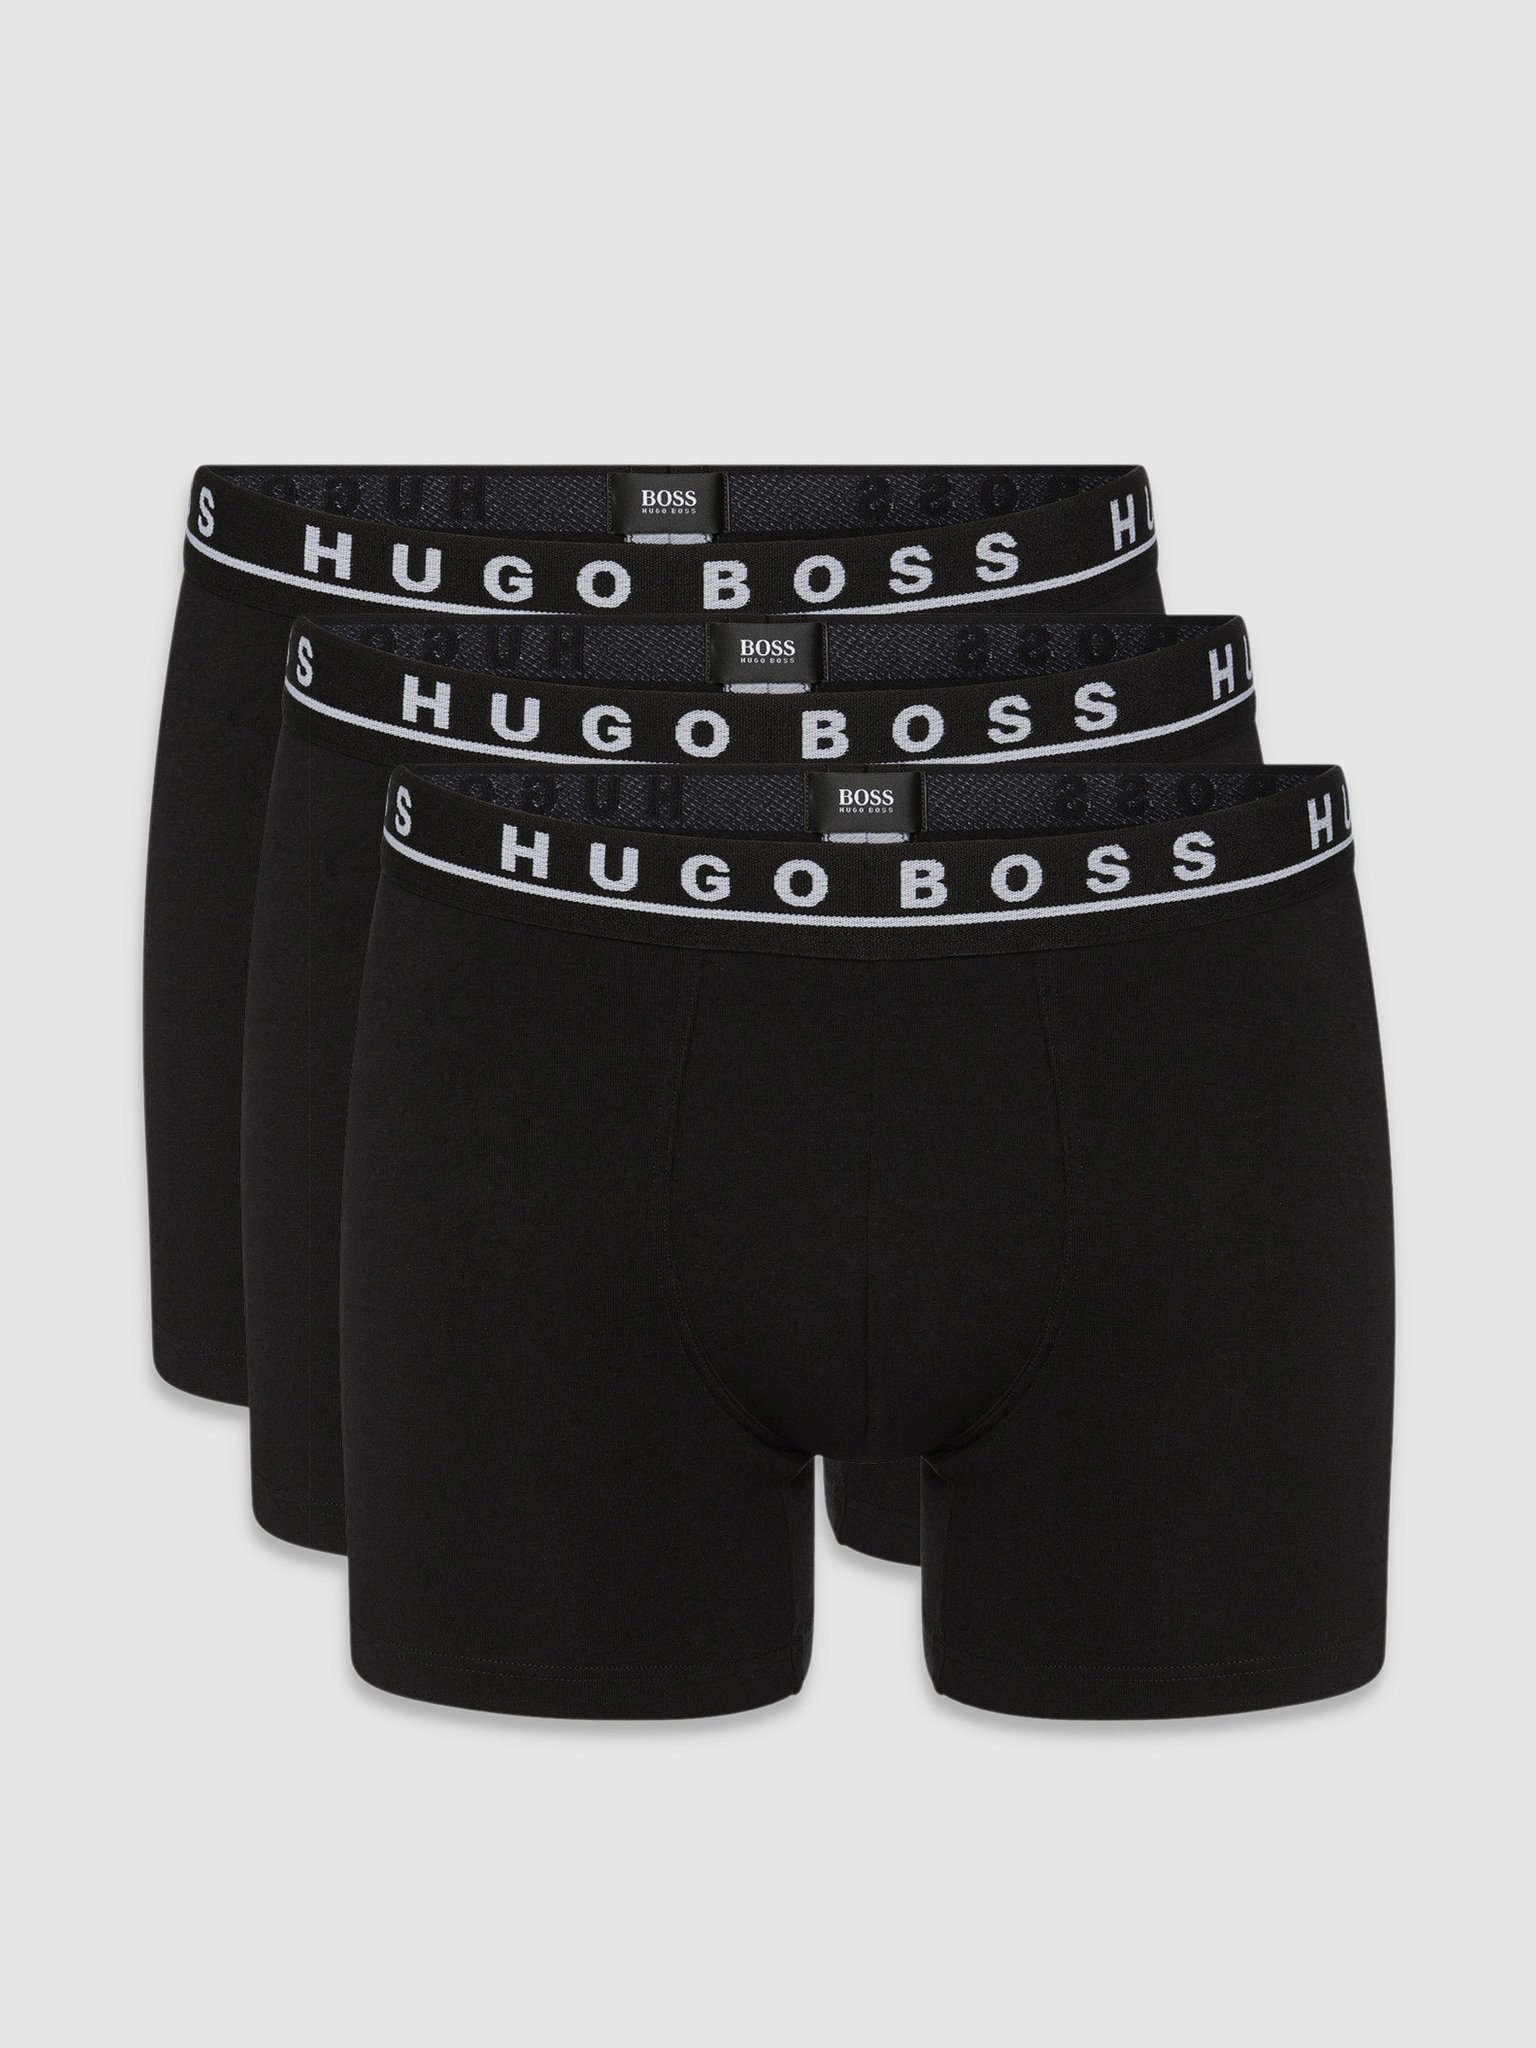 Hugo Boss Boxer Brief 3-Pack | Verishop